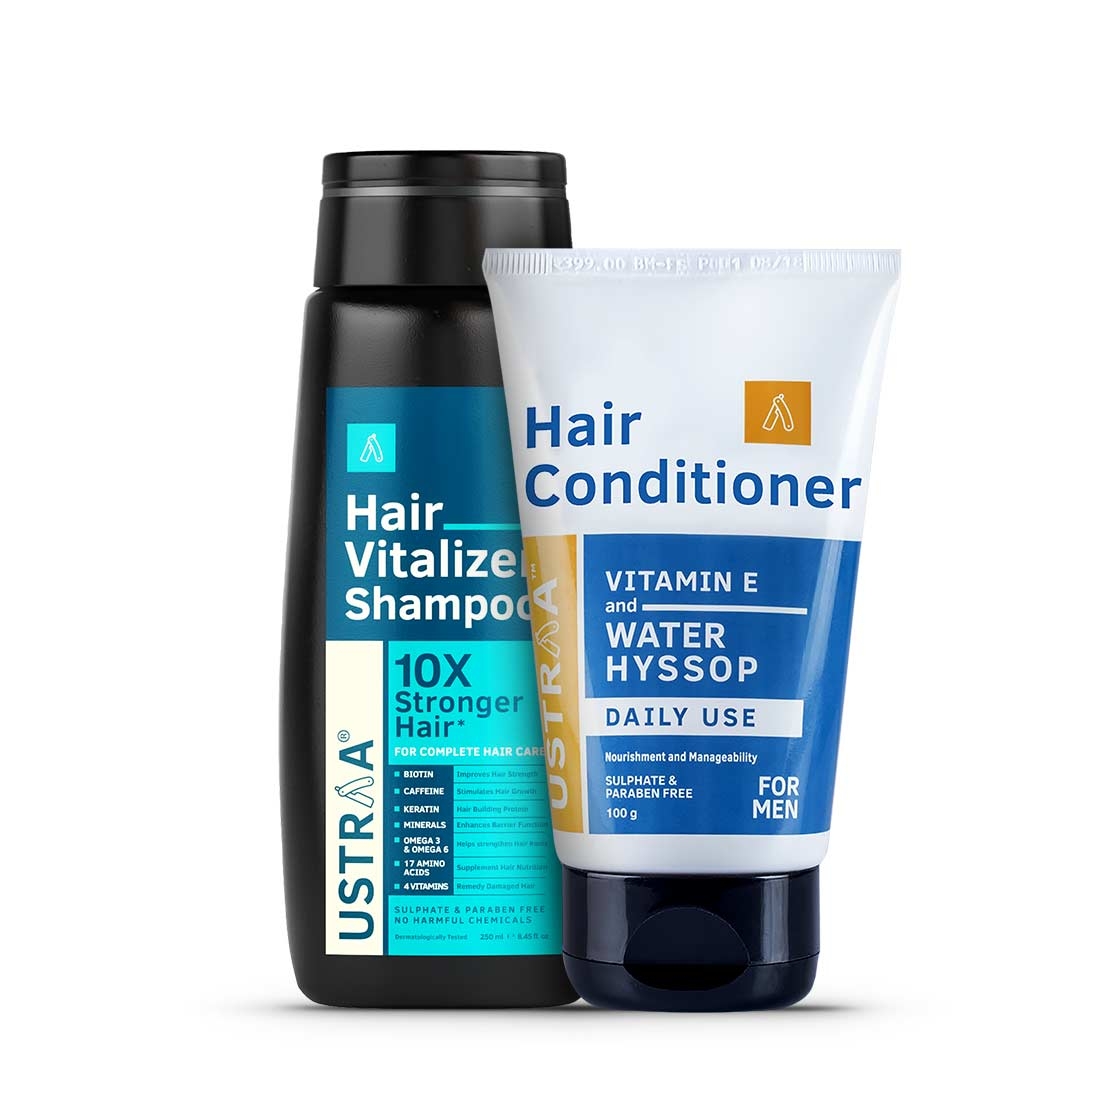 Ustraa | Ustraa Hair Vitalizer Shampoo - 250ml & Daily-Use Hair Conditioner - 100g 0